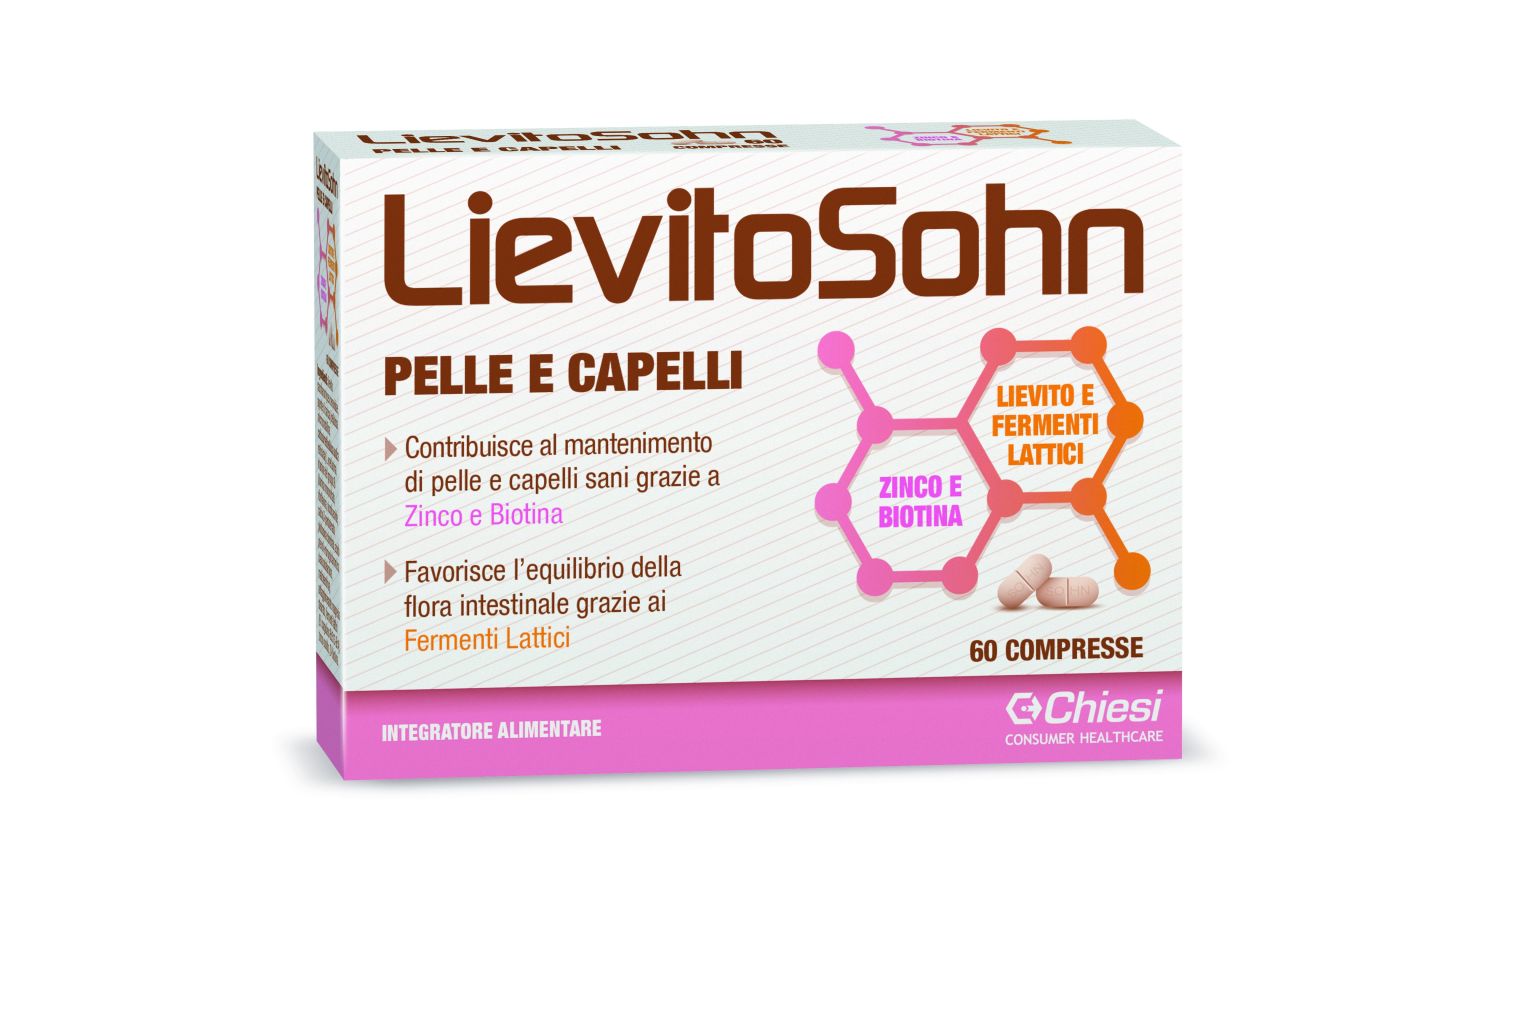 973726514 - Lievitosohn Integratore Pelle Capelli 60 compresse - 7892495_2.jpg